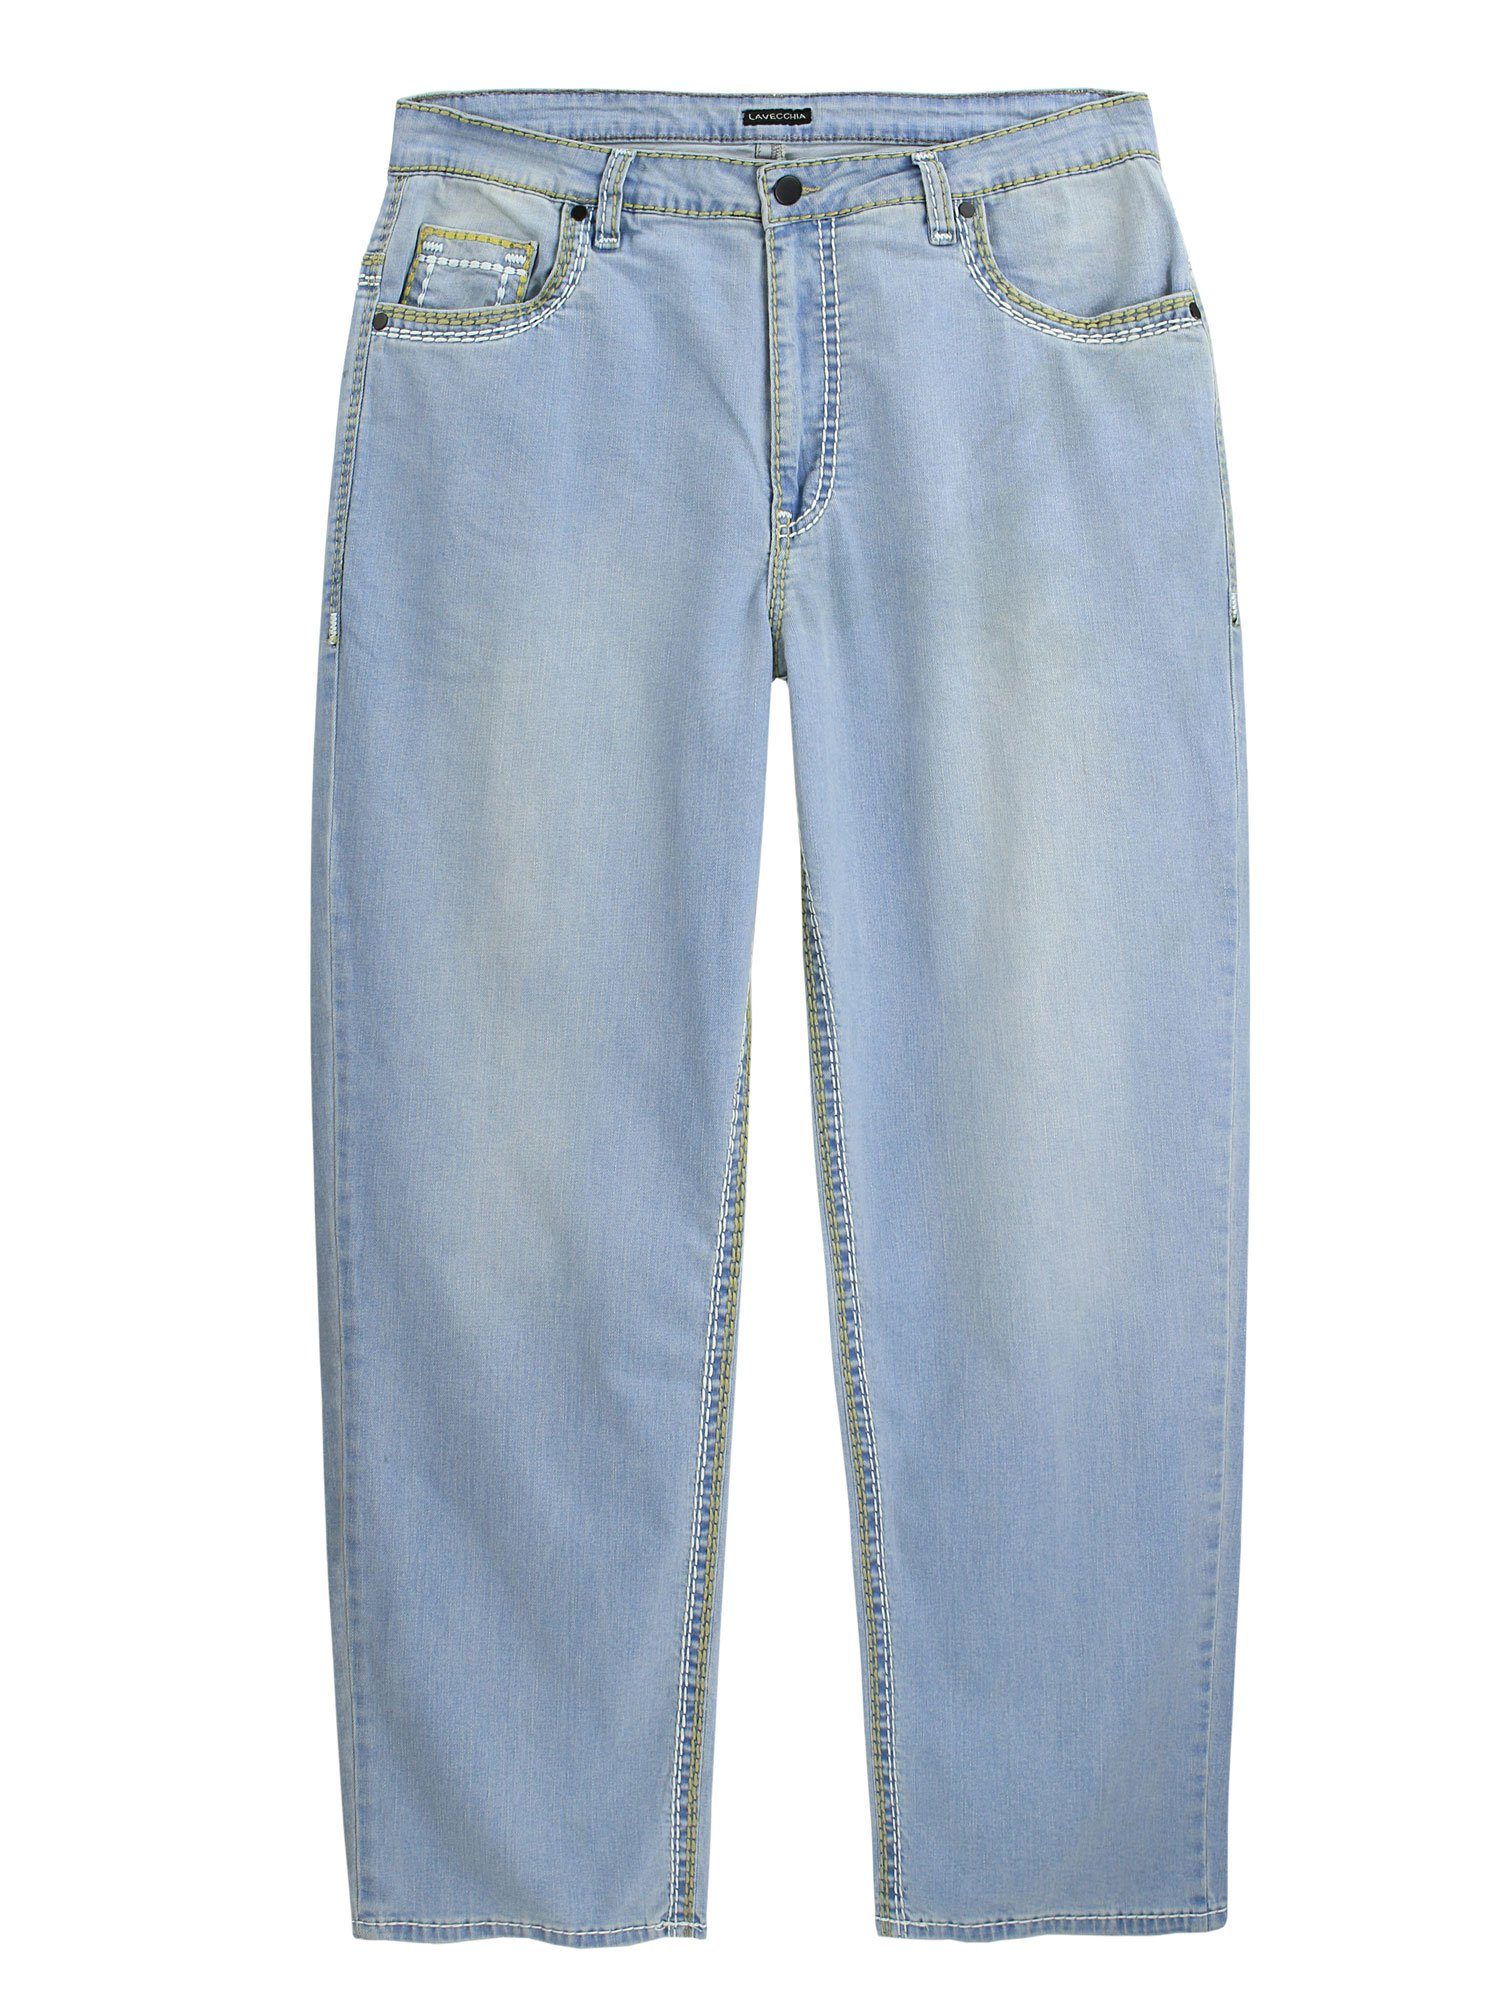 Herren Comfort-fit-Jeans Stretch LV-503 Lavecchia Naht dicker Elasthan hellblau Übergrößen Jeanshose & mit